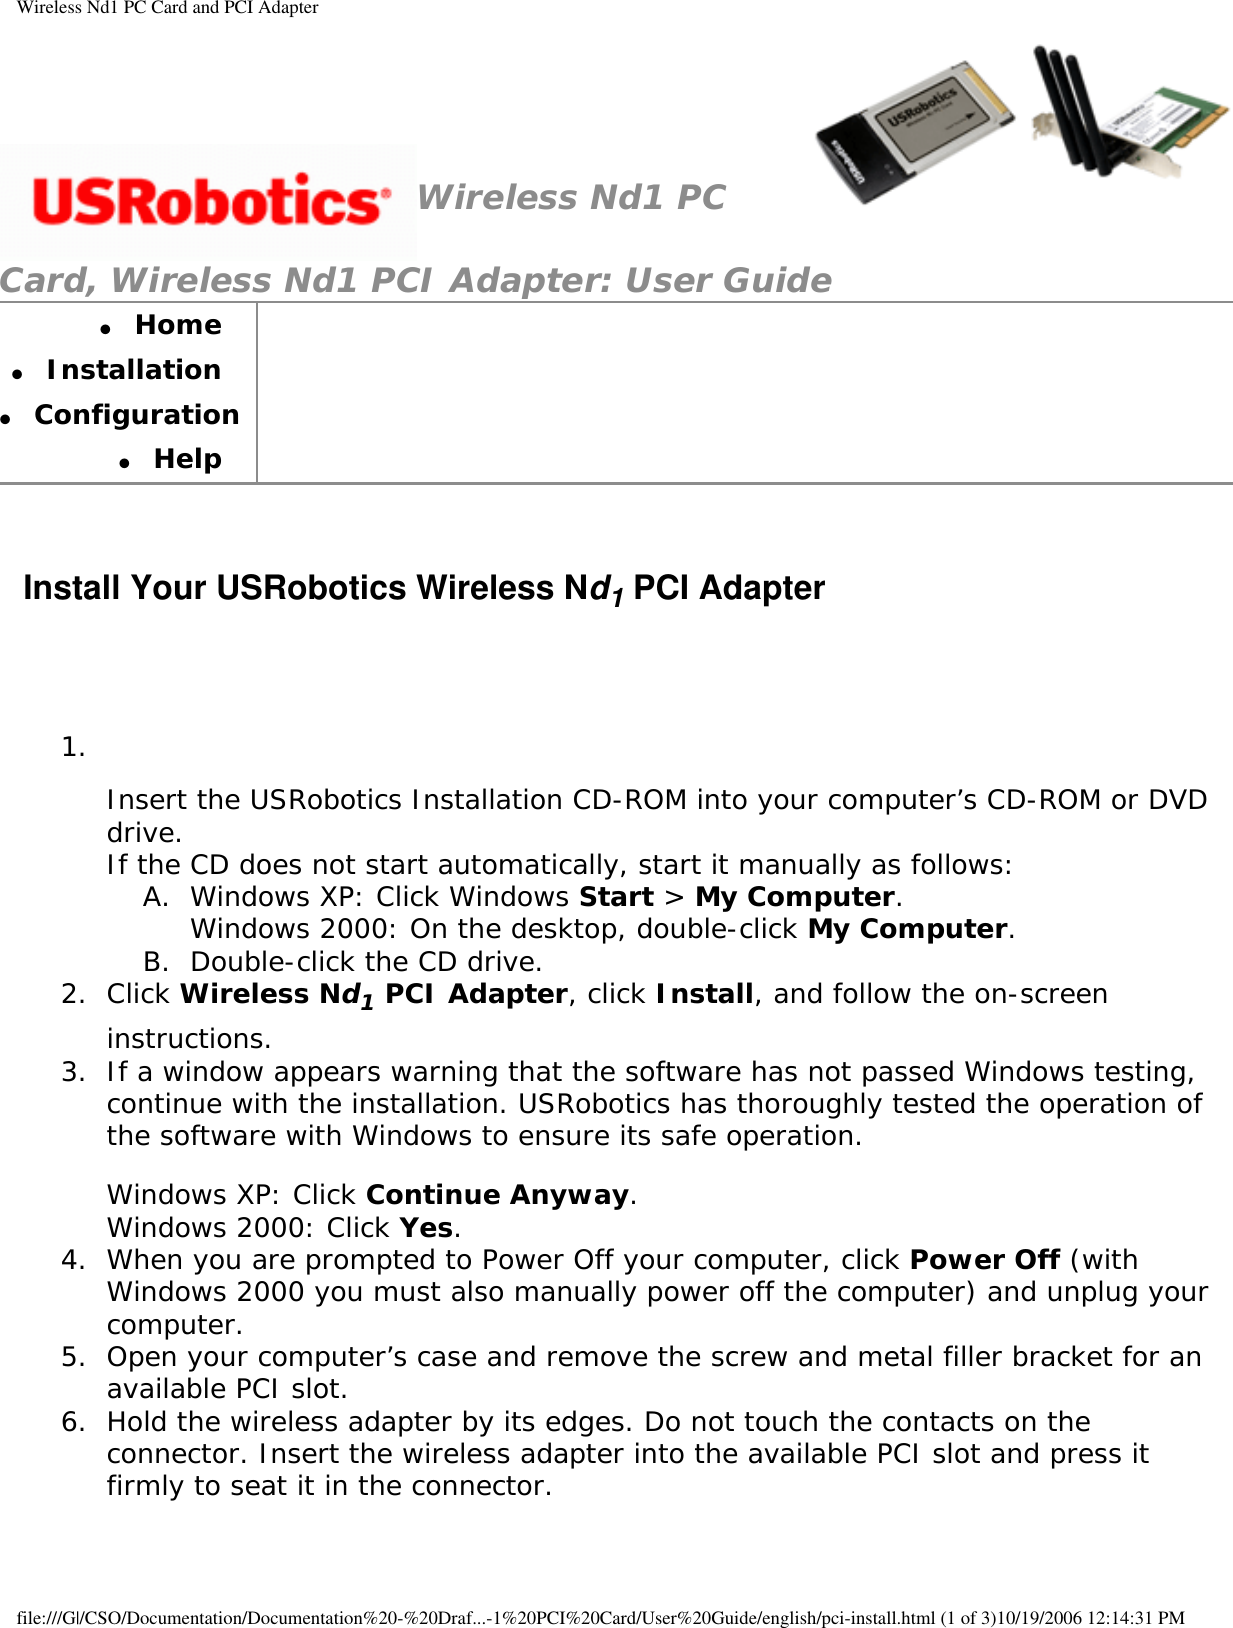 Page 6 of GemTek Technology P950622G USRobotics Wireless Nd1 PCI Adapter User Manual Wireless Nd1 PC Card and PCI Adapter